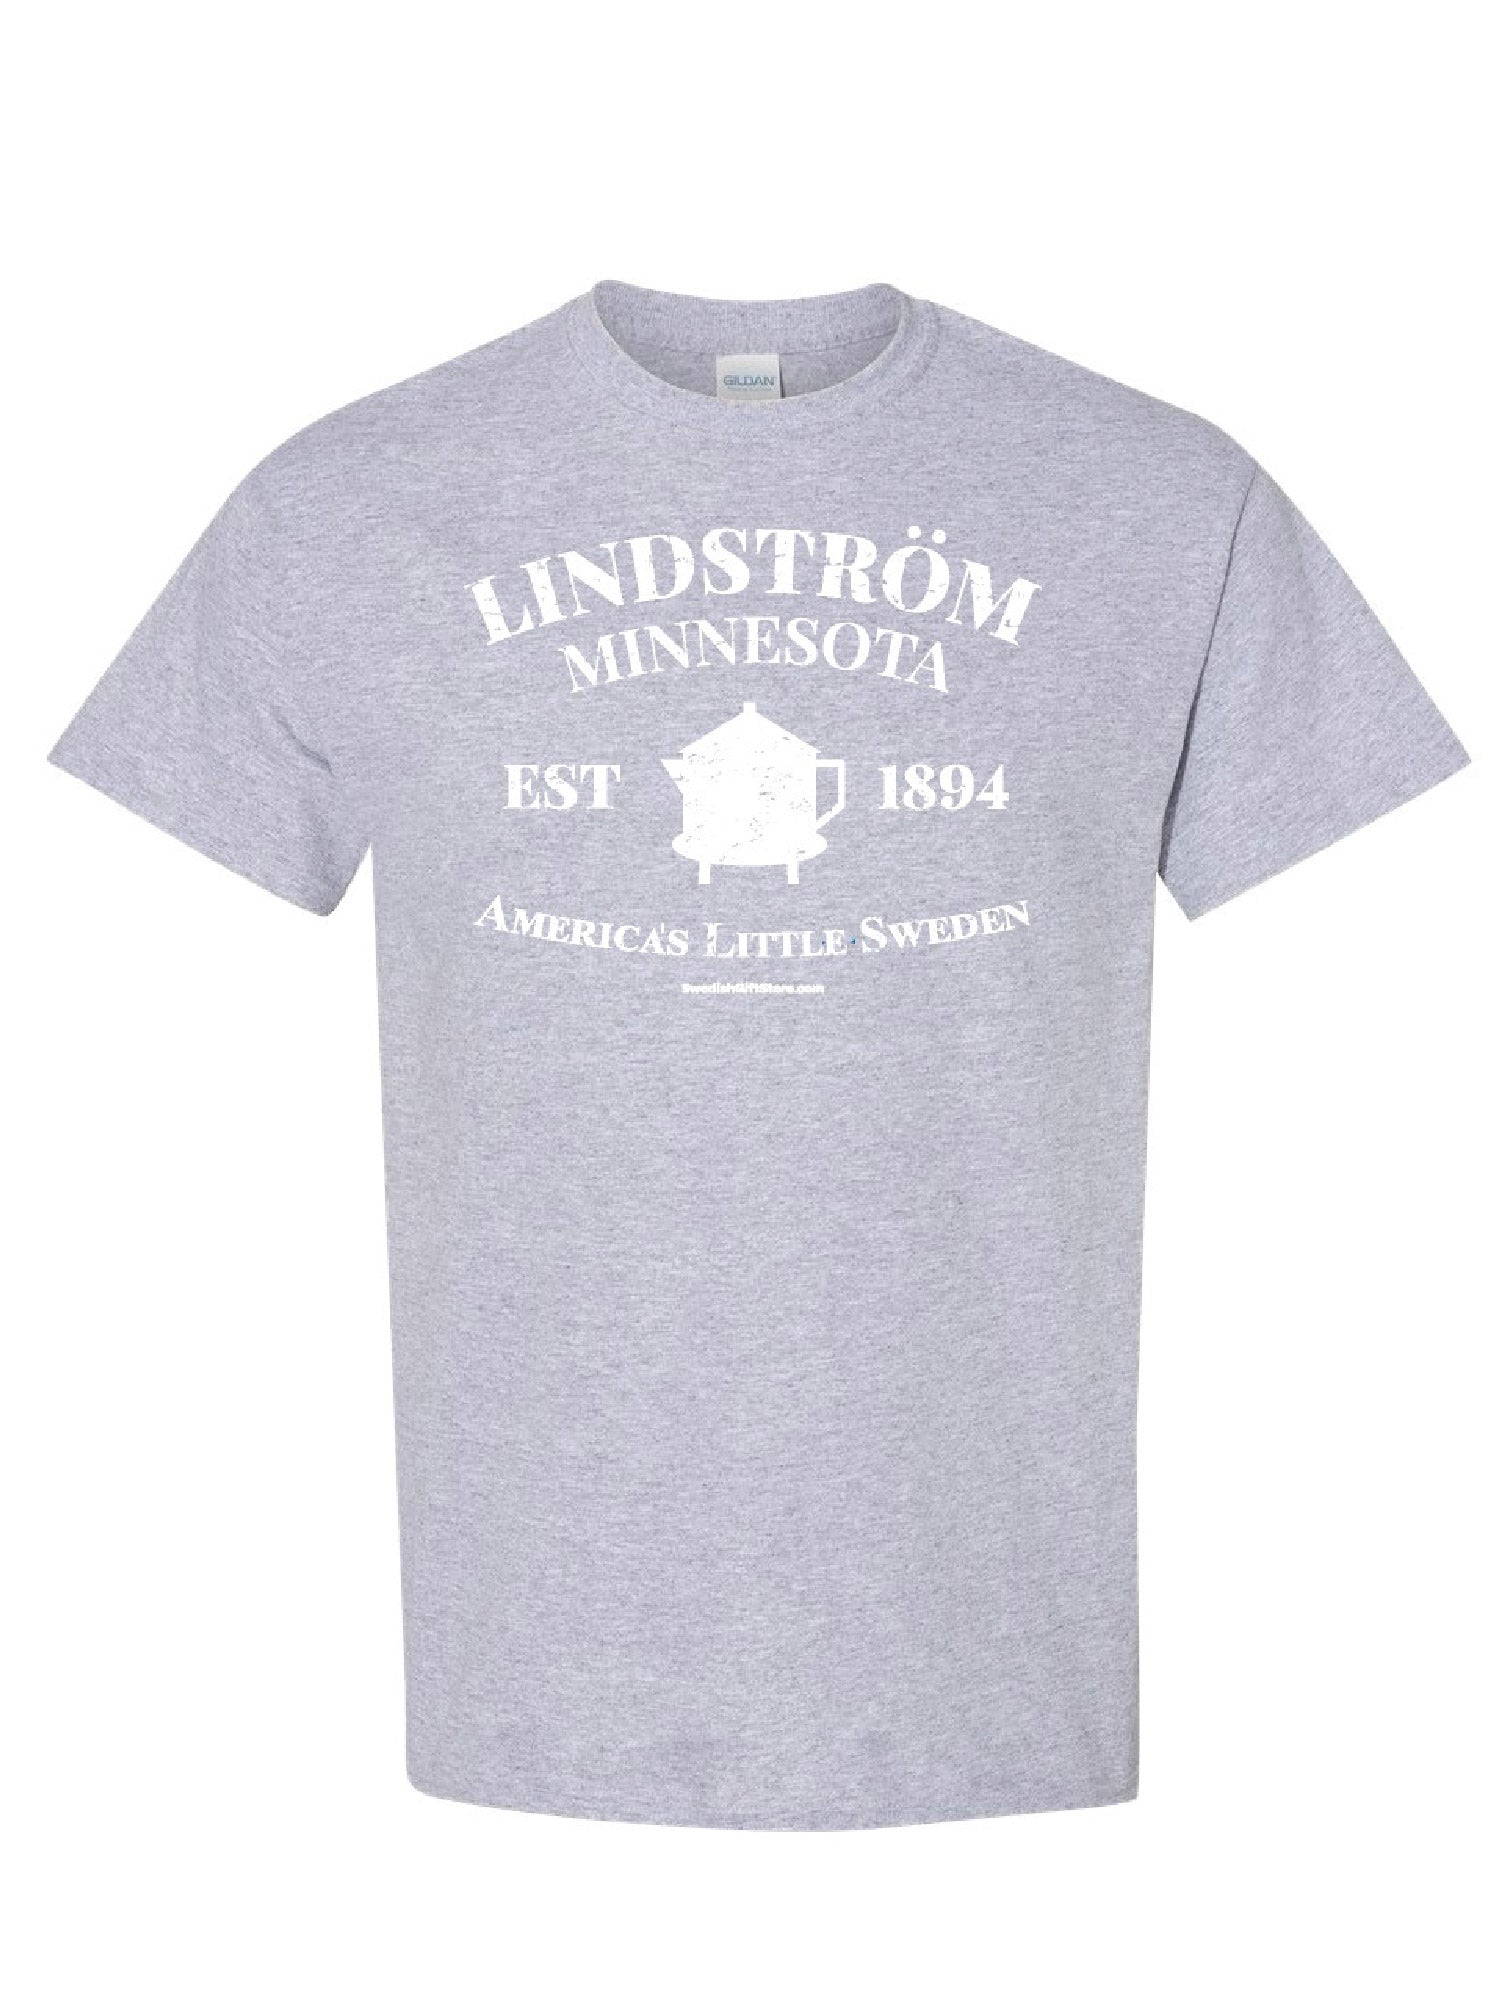 Tee: Lindstrom EST 1894